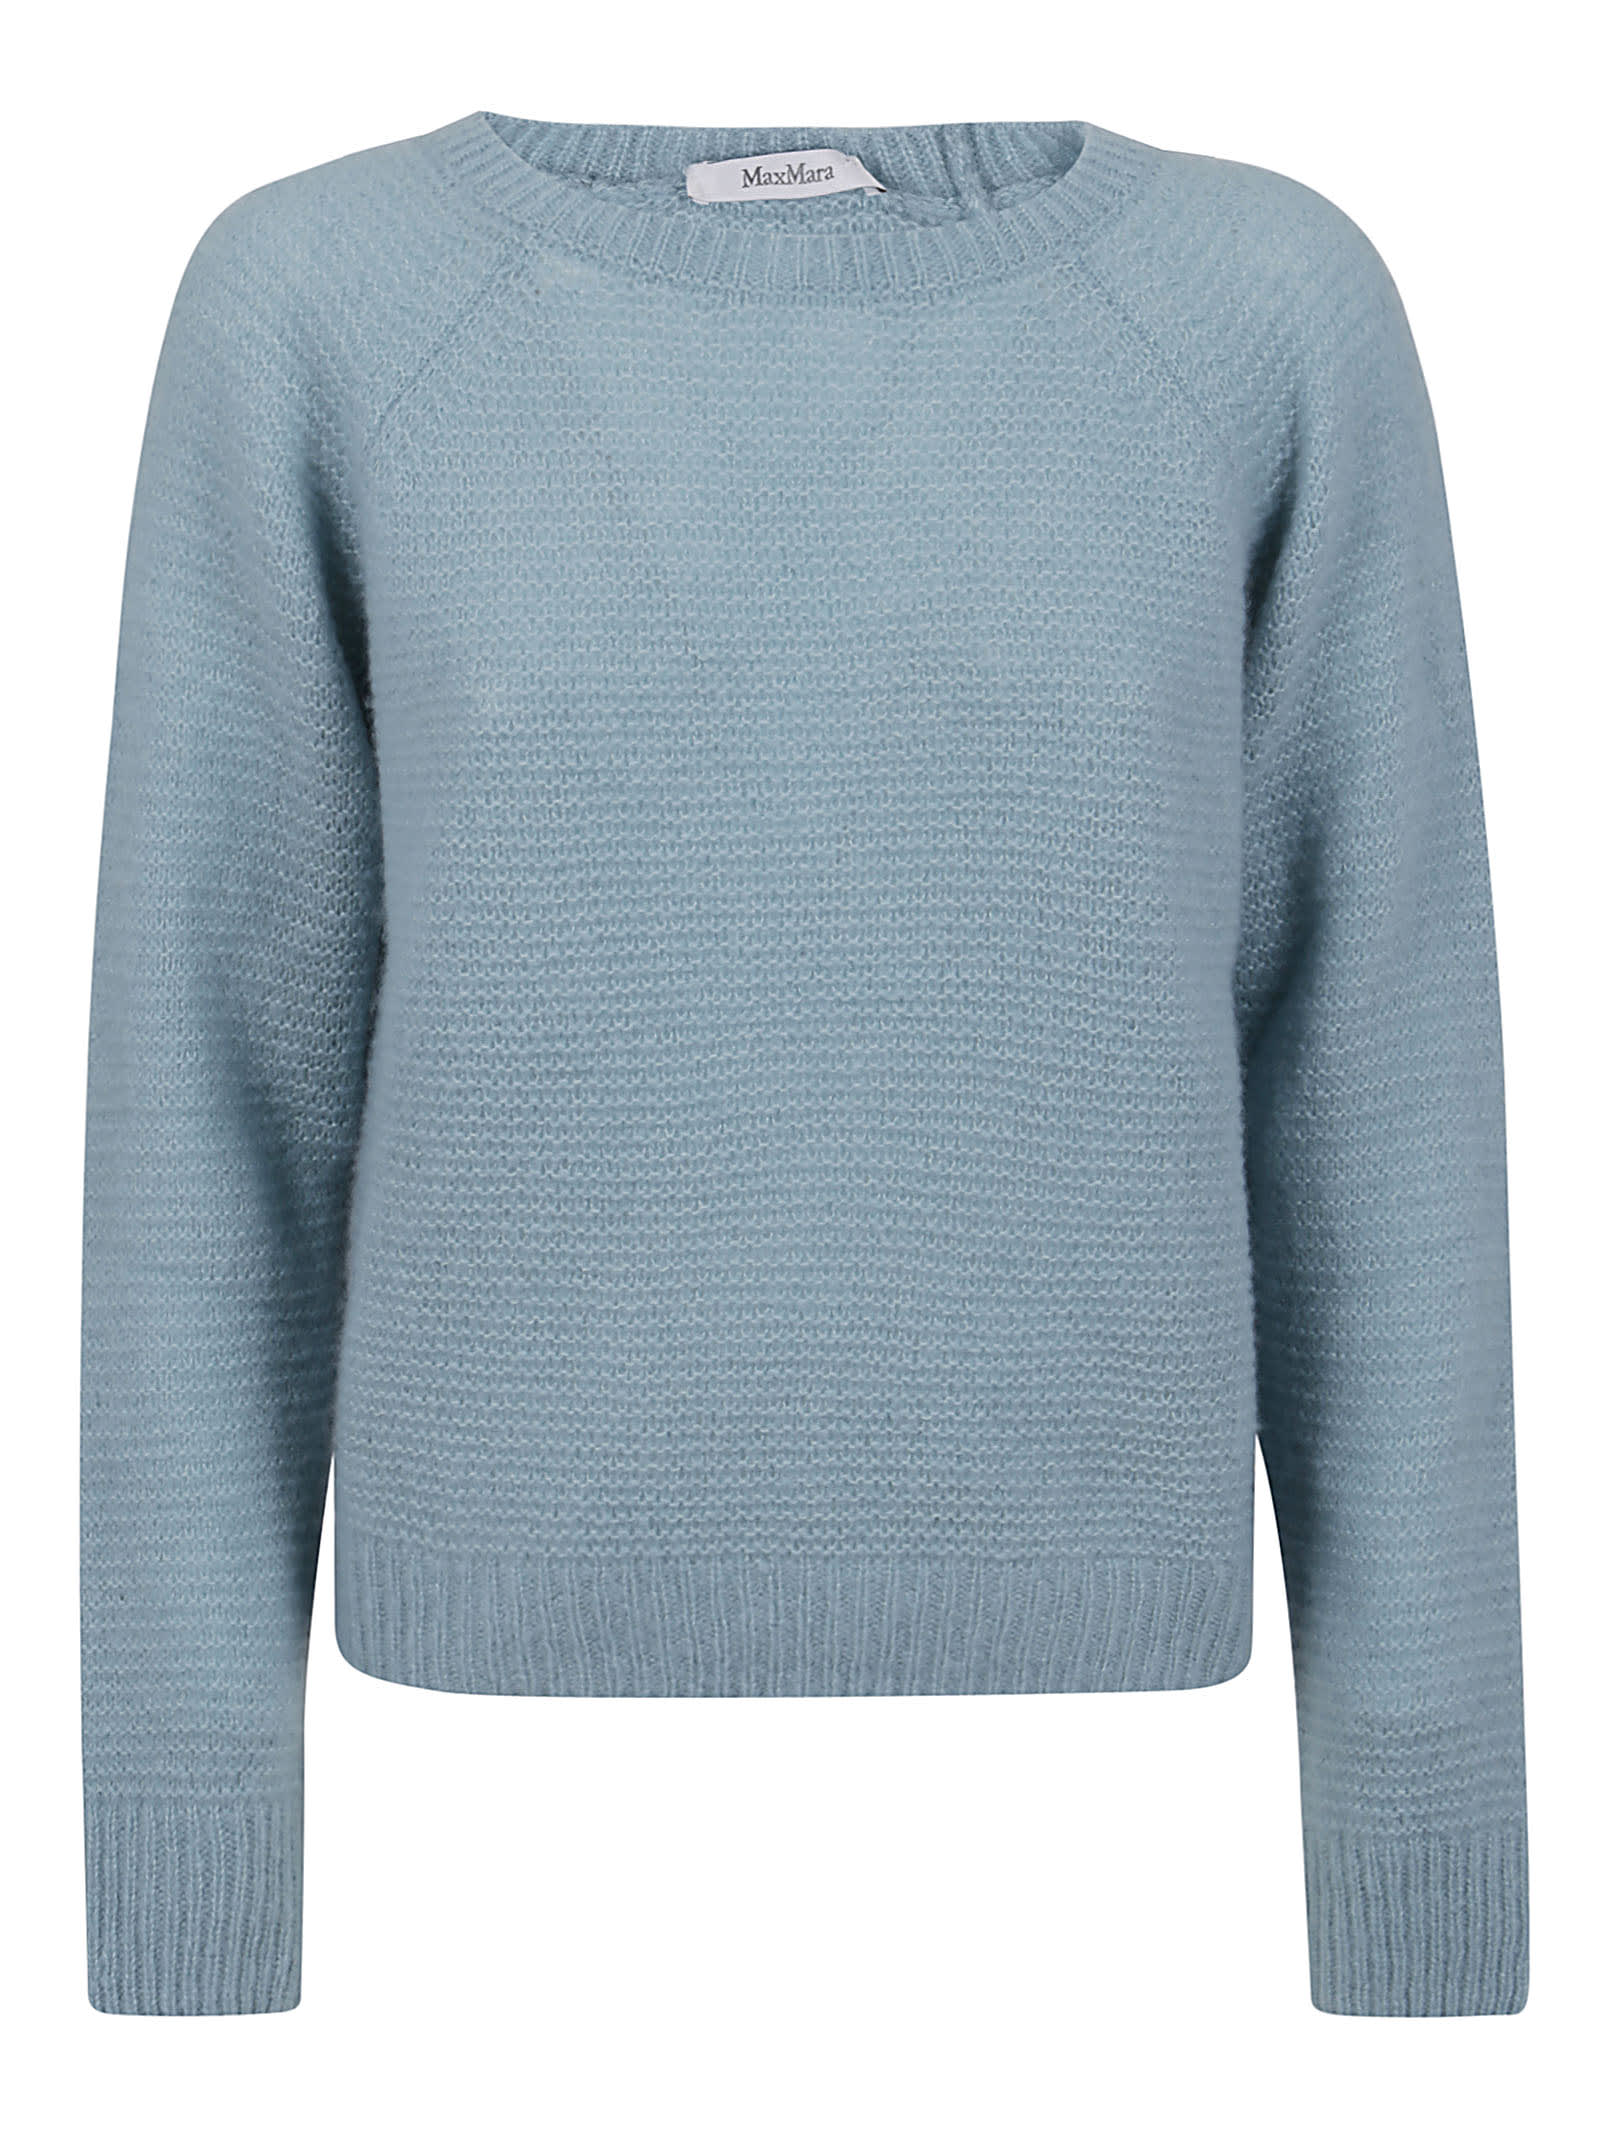 Max Mara Light Blue Cashmere Sweater